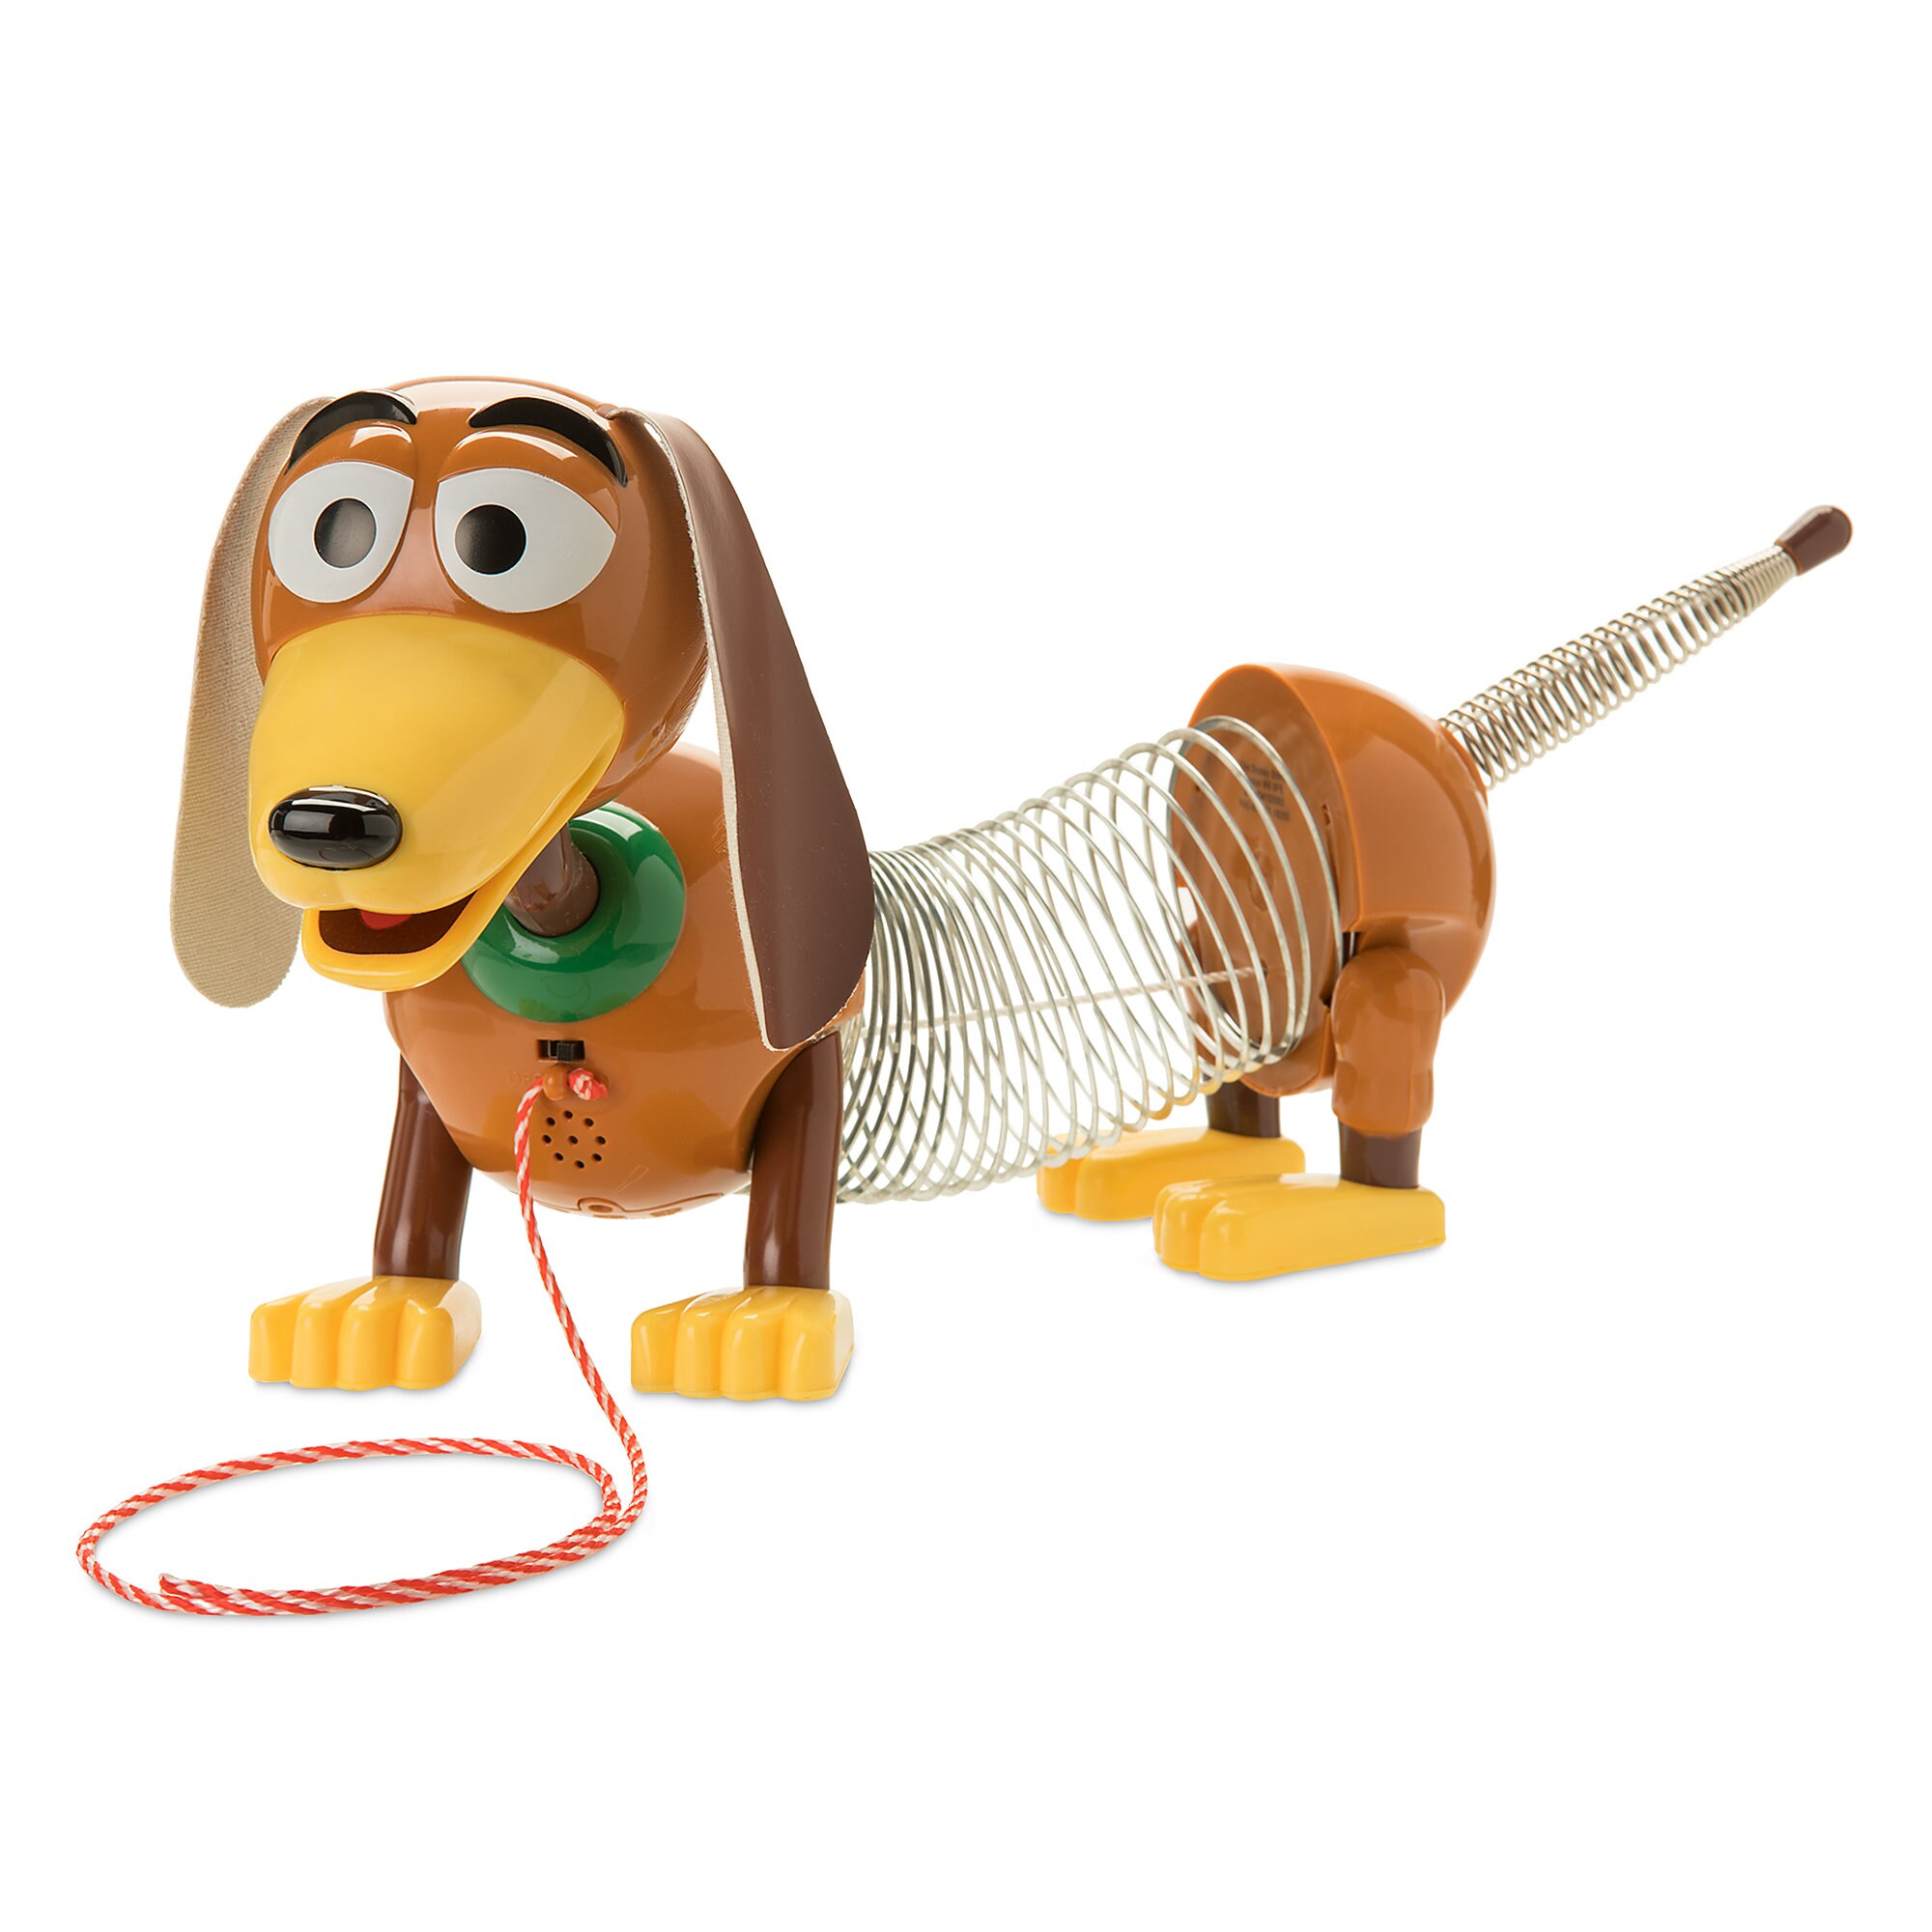 Slinky Dog Talking Action Figure - Toy Story